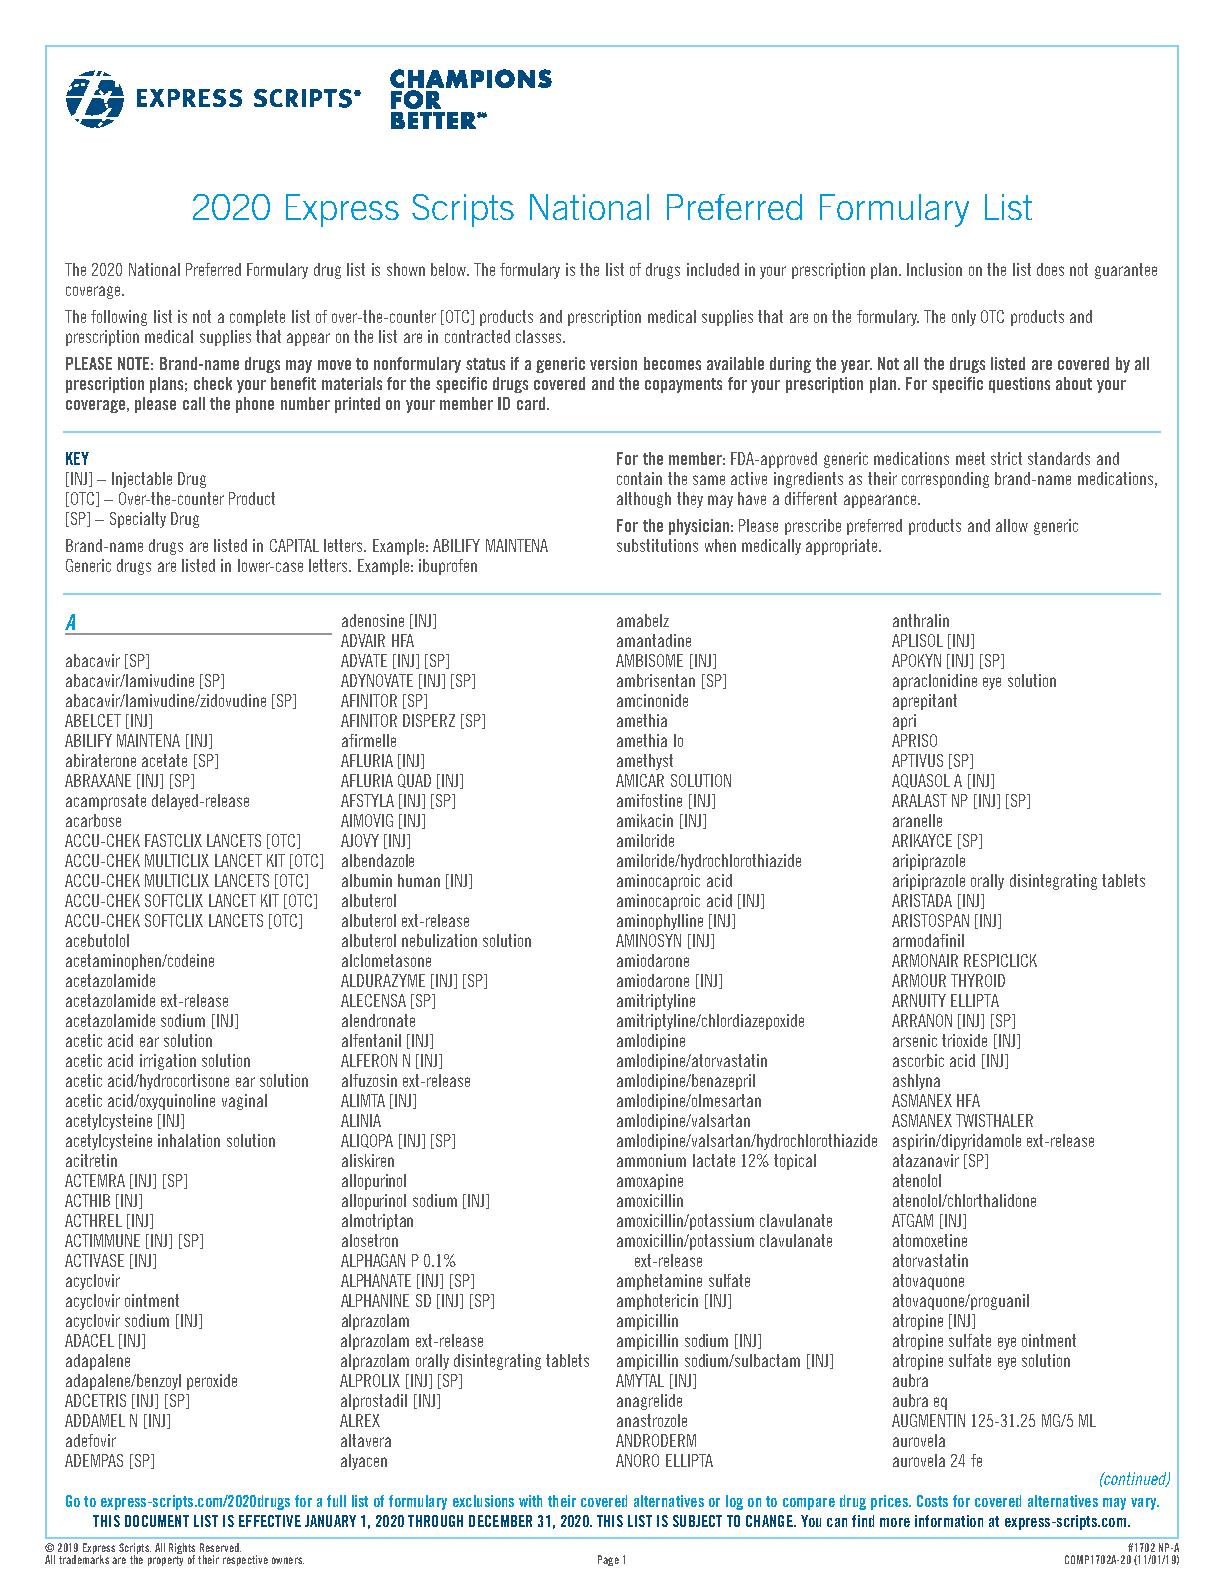 Express Scripts 2020 National Preferred Formulary List PDF Host